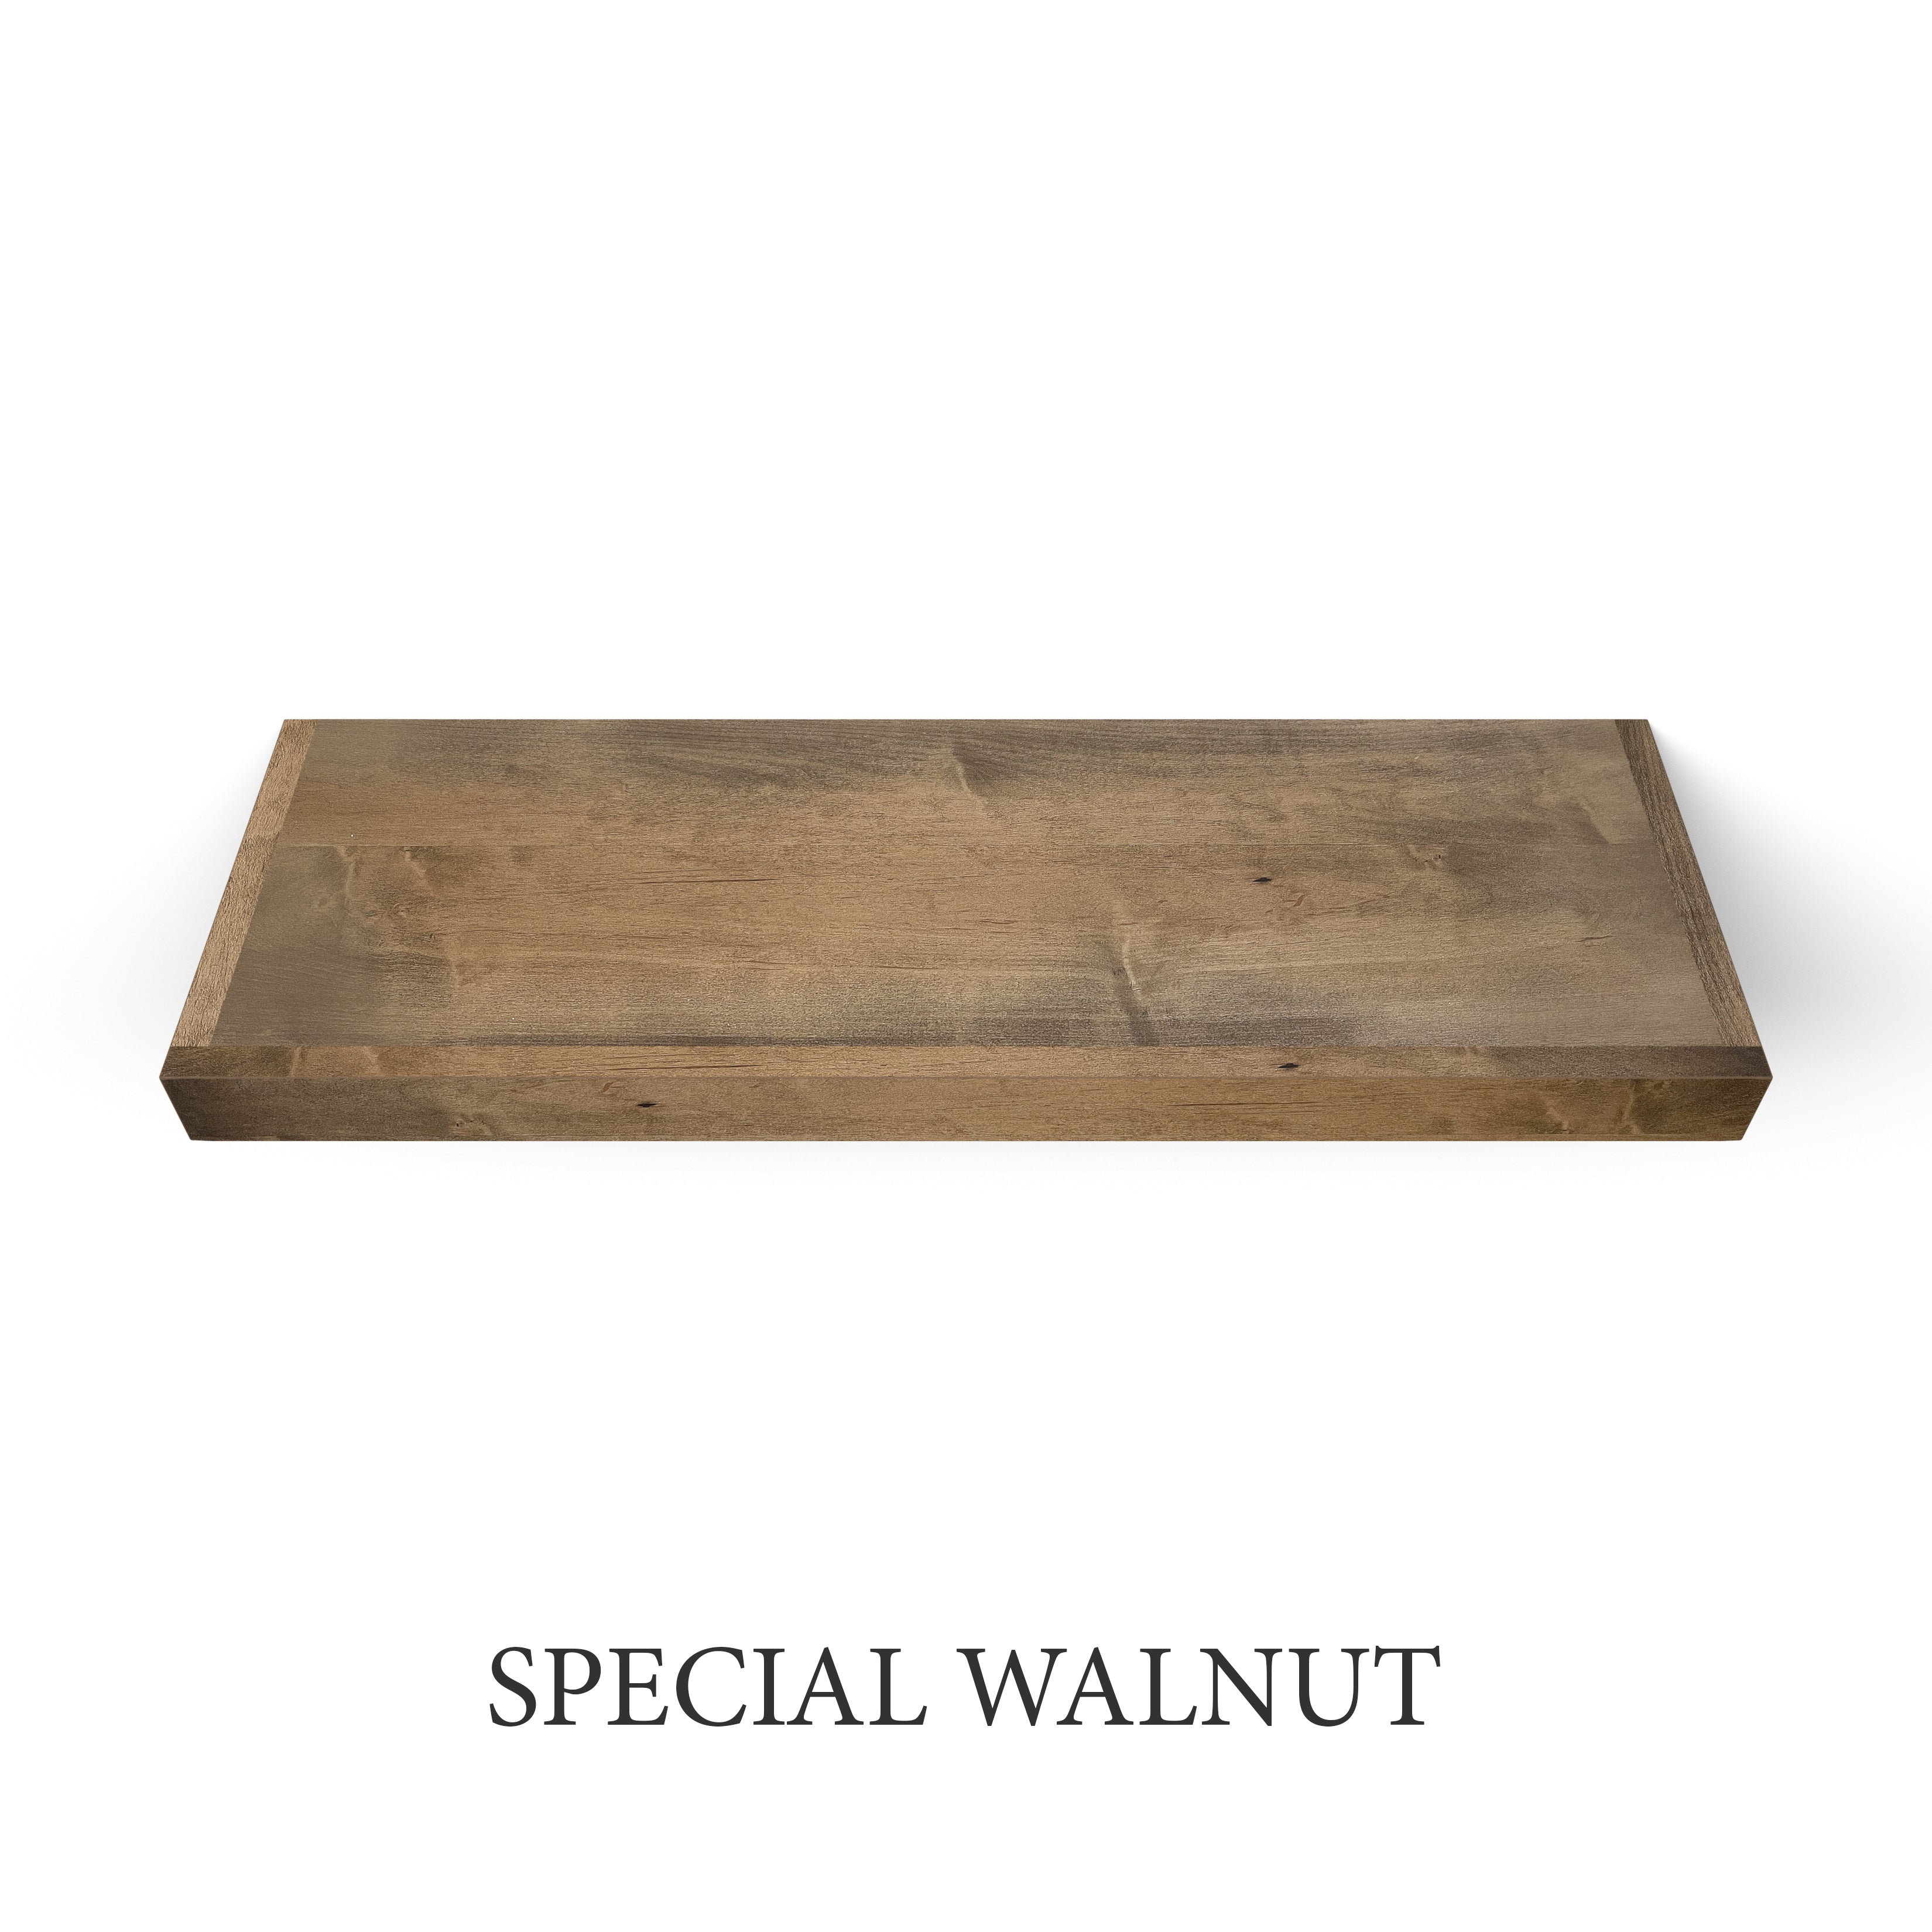 special walnut Maple 2 inch Thick Floating Shelf